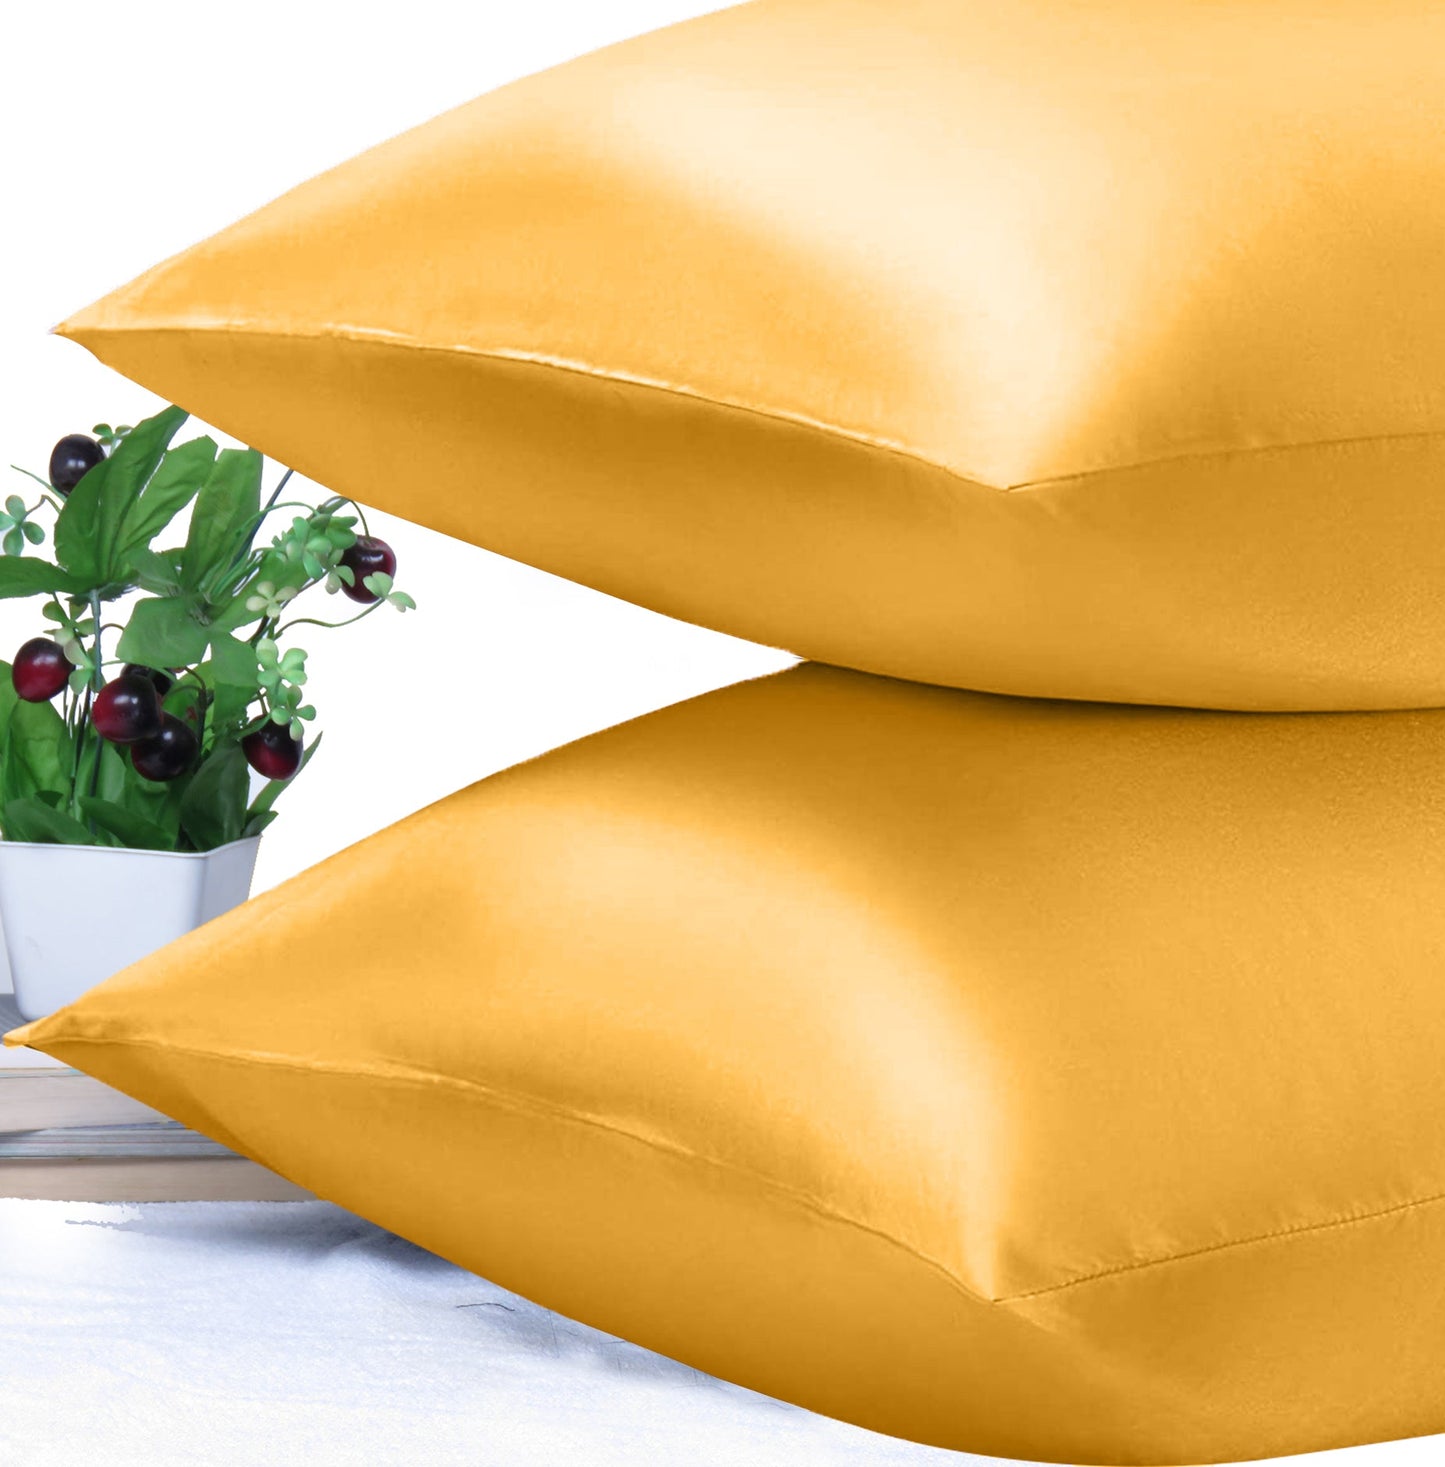 Luxury Soft Plain Satin Silk Pillowcases in Set of 2 - Apricot Tan